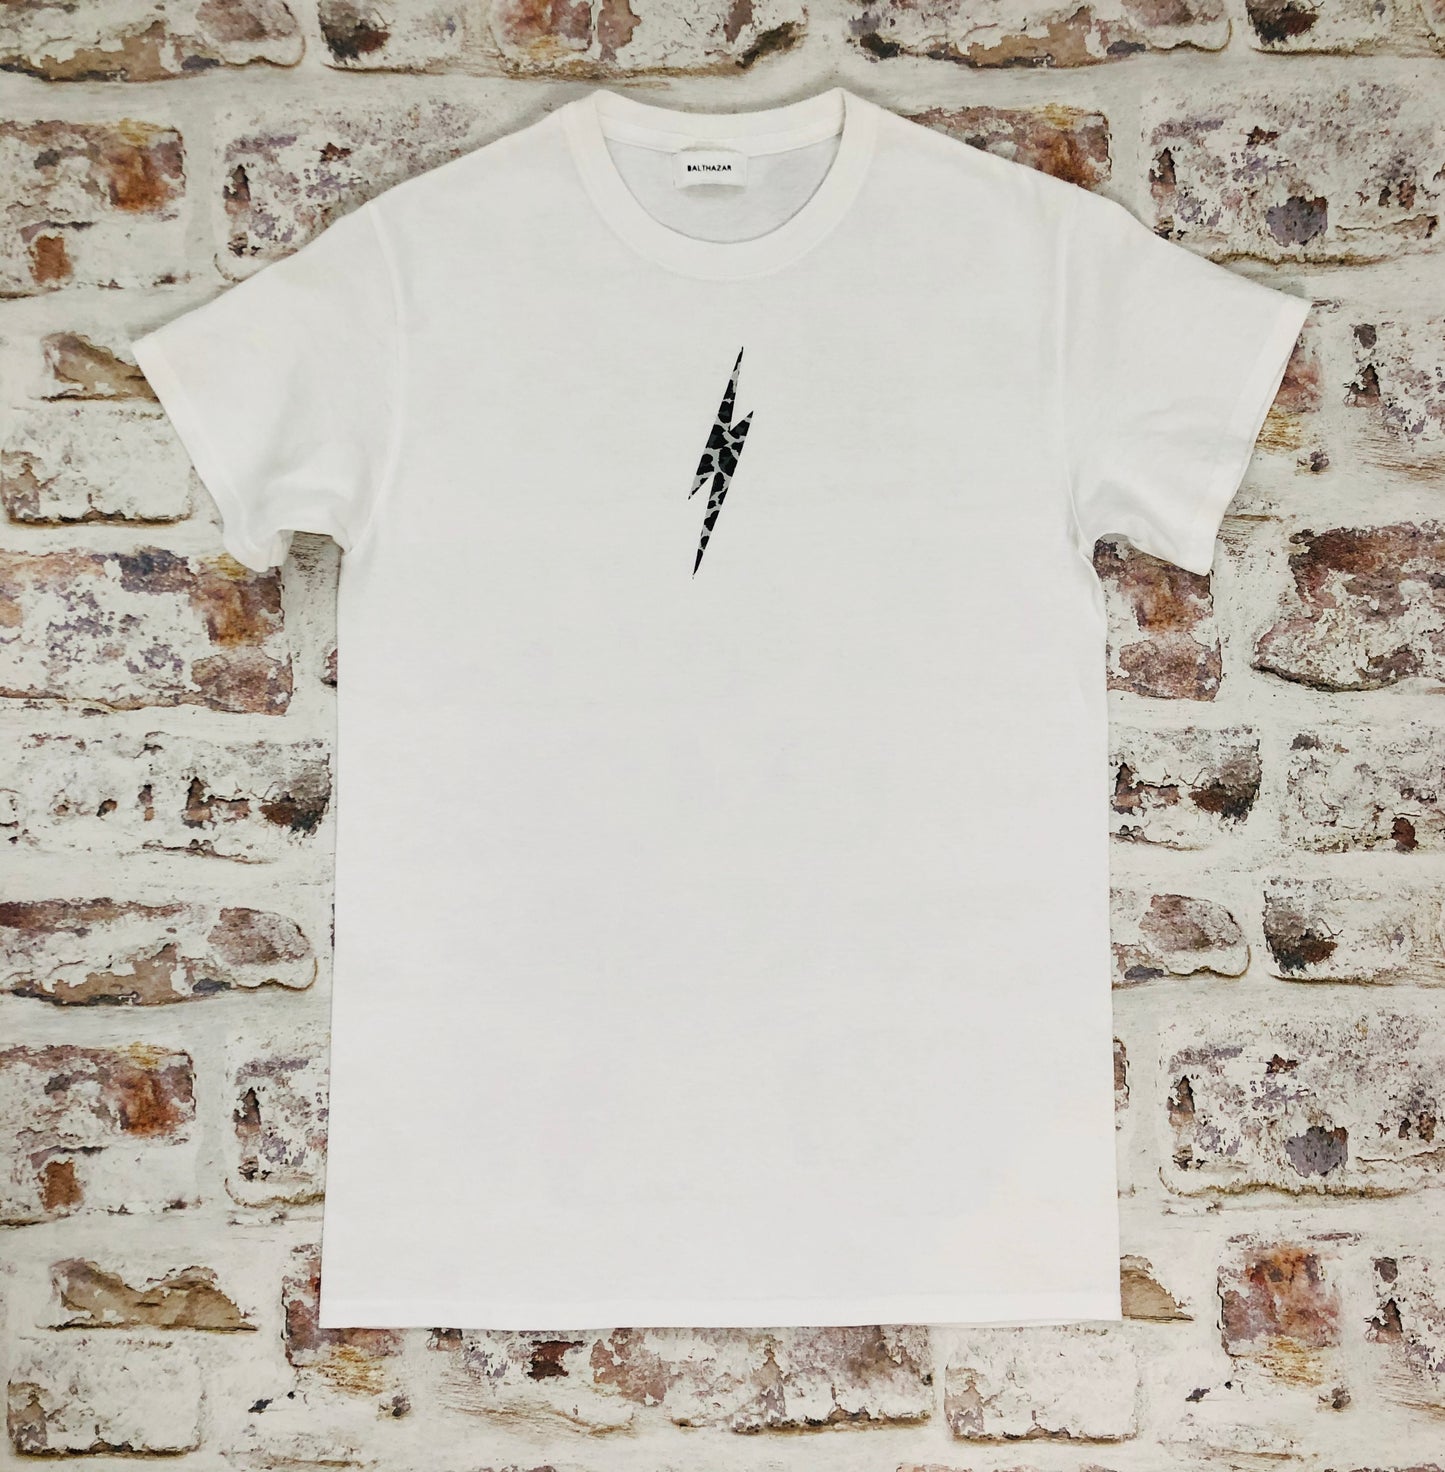 Animal print lightning bolt t-shirt